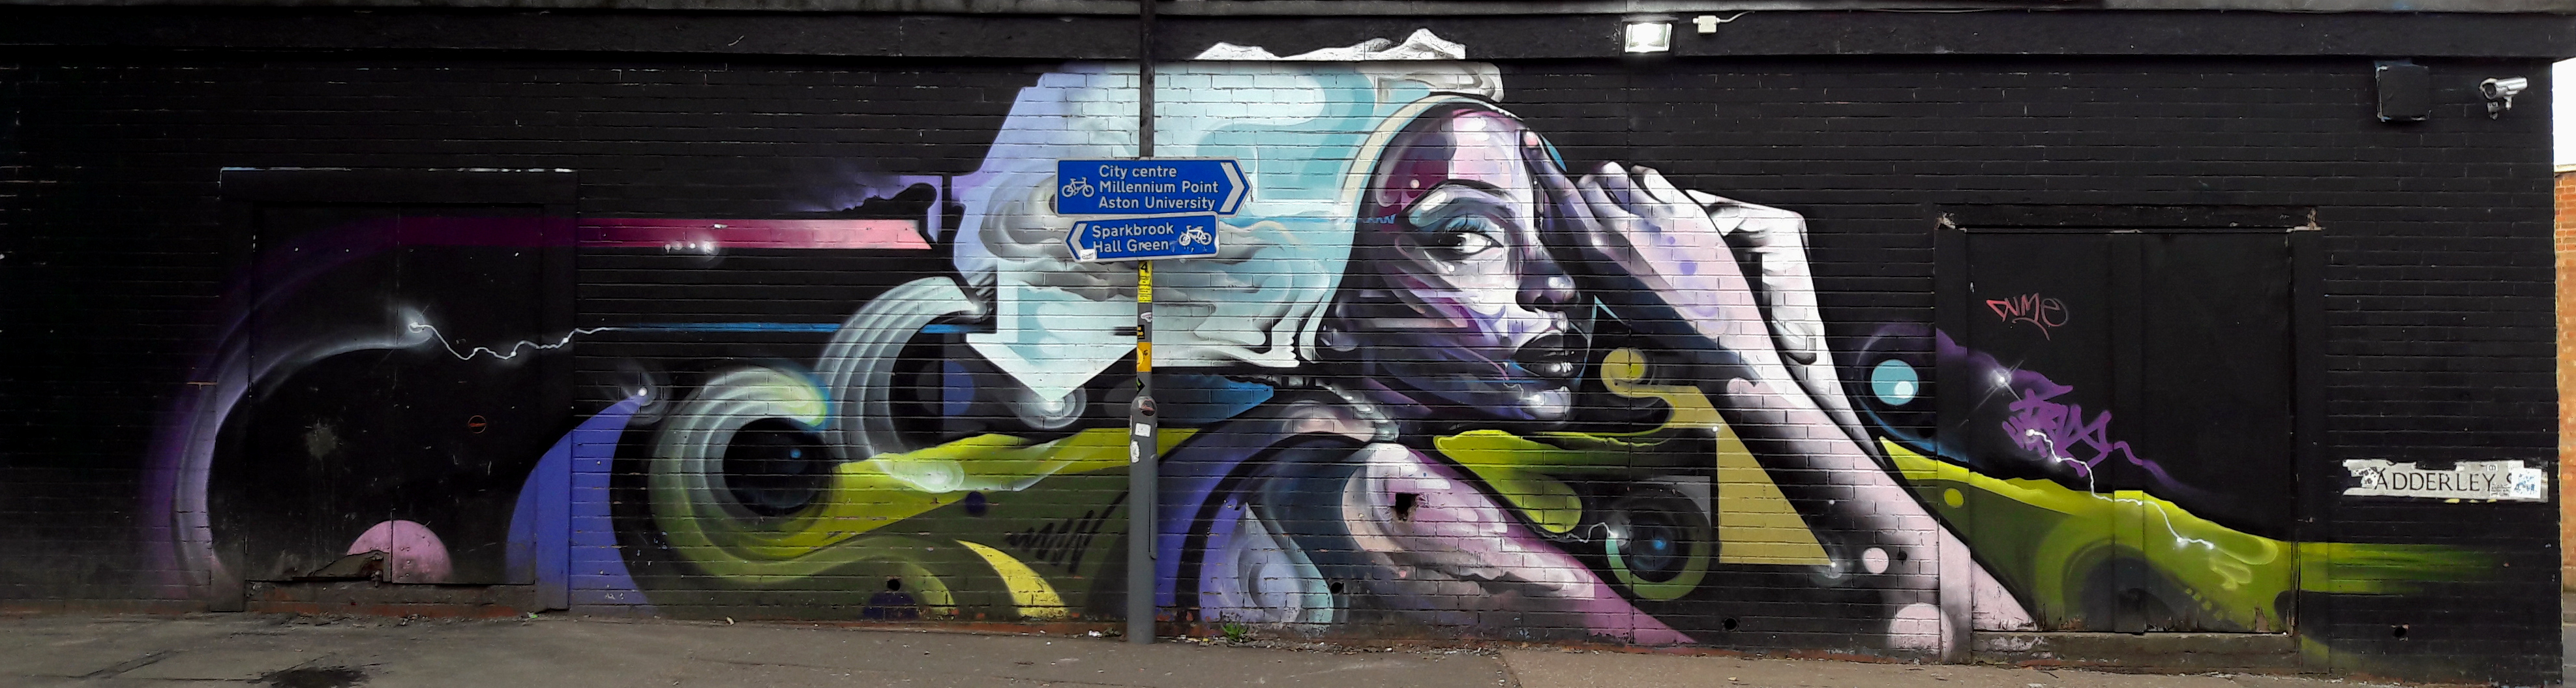 Graffiti 6547  by the artist Mr CENZ captured by Mephisroth in birmingham United Kingdom